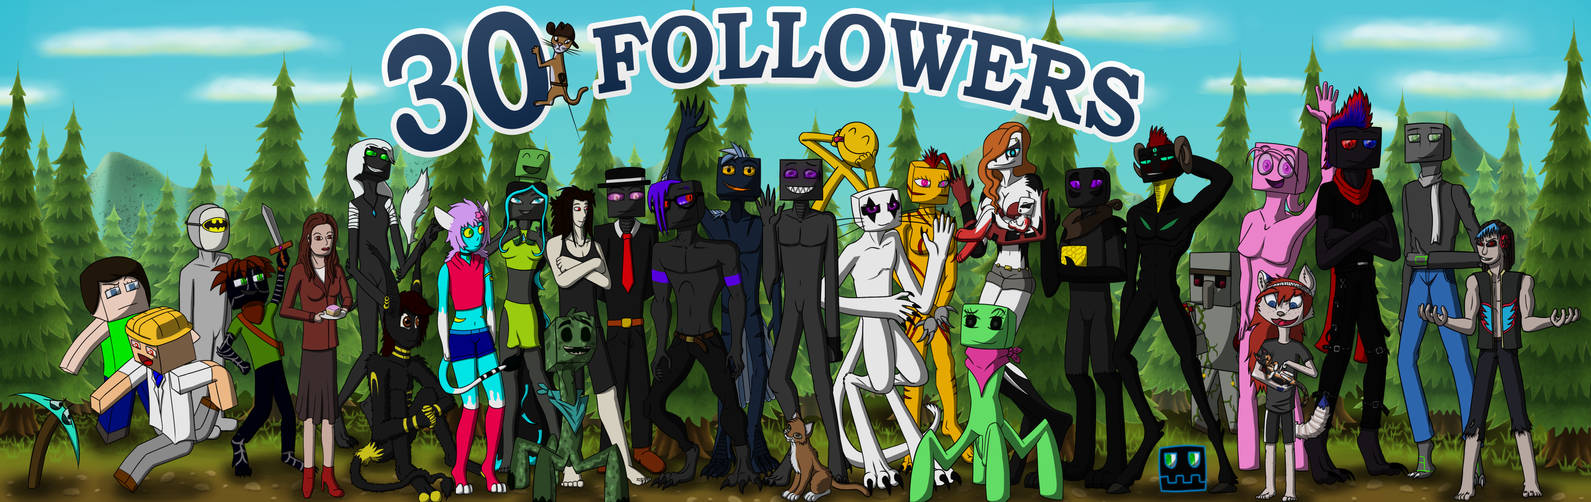 30 Followers (Erwin and his Tumblr)